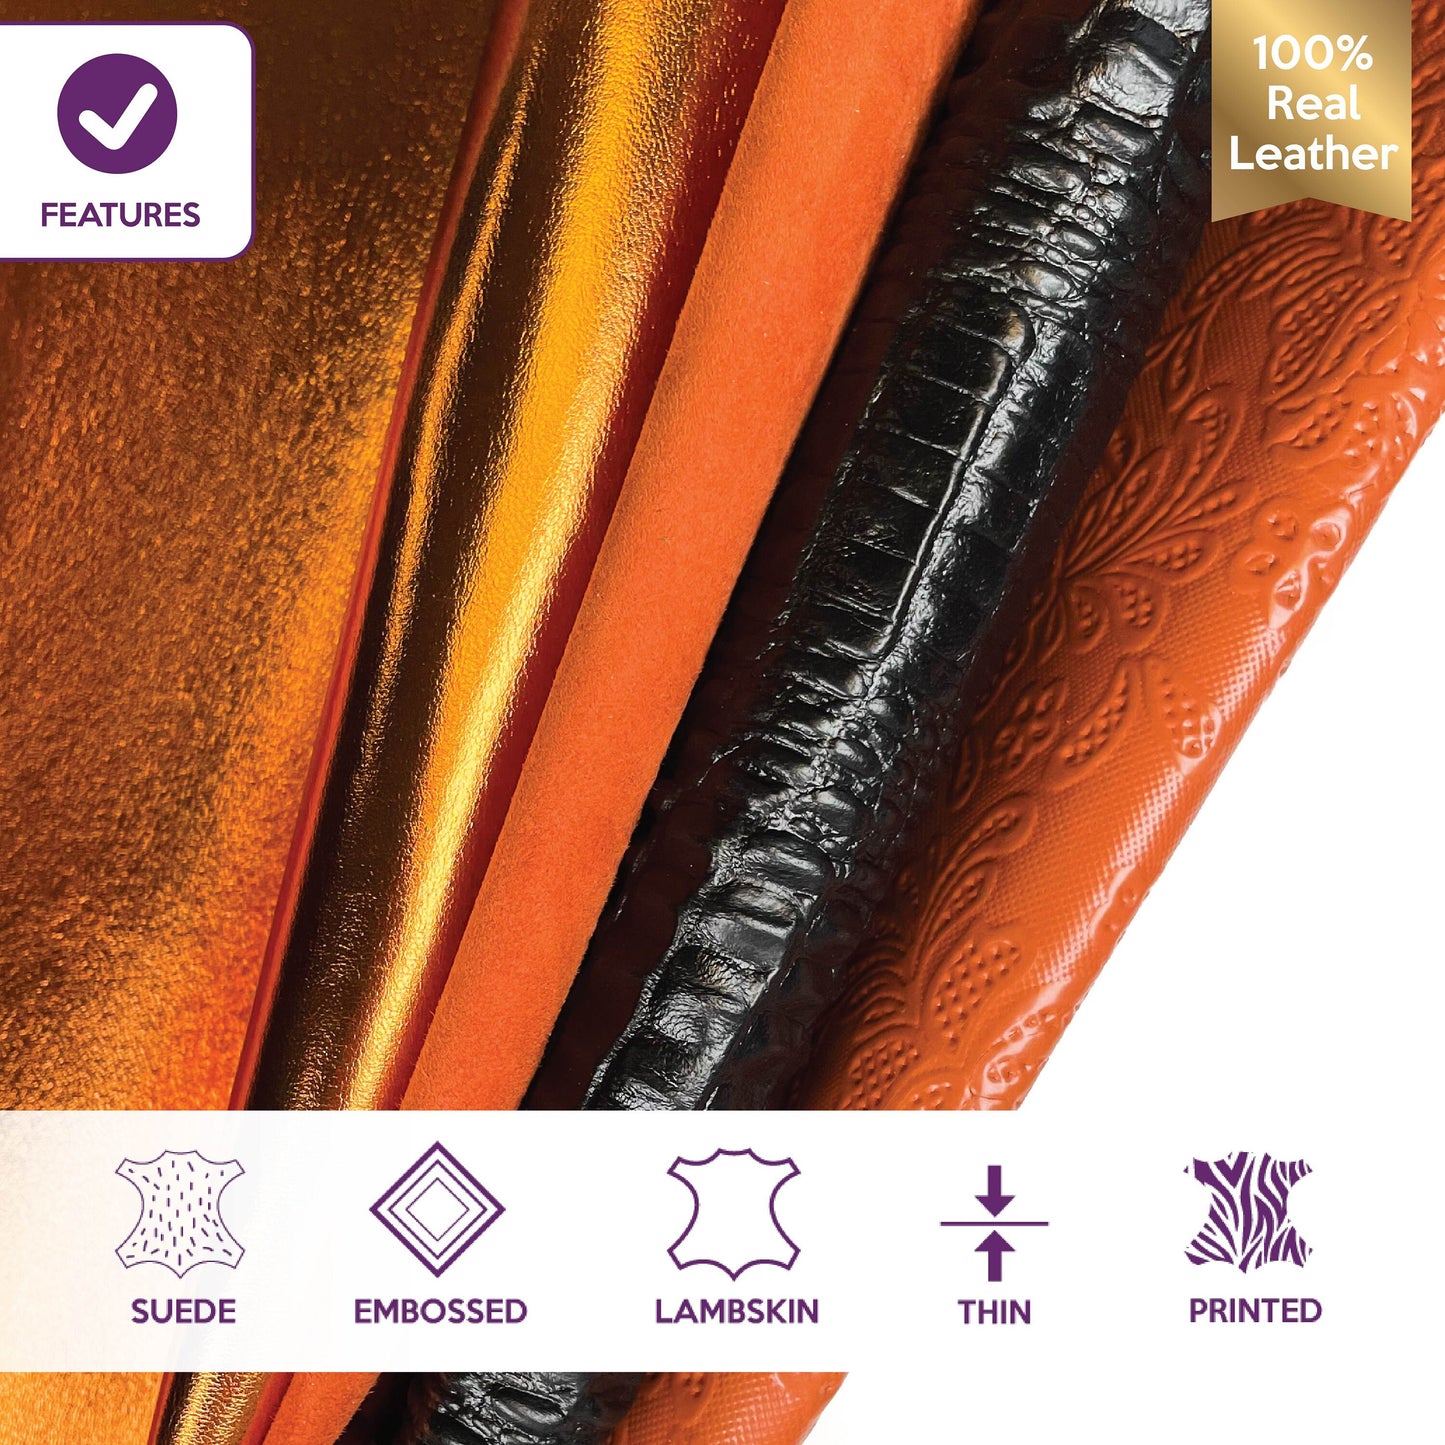 Halloween Theme Lambskin Leather Bundle of 4 Italian Skins 0.5-1.0mm / 1.25-2.5oz